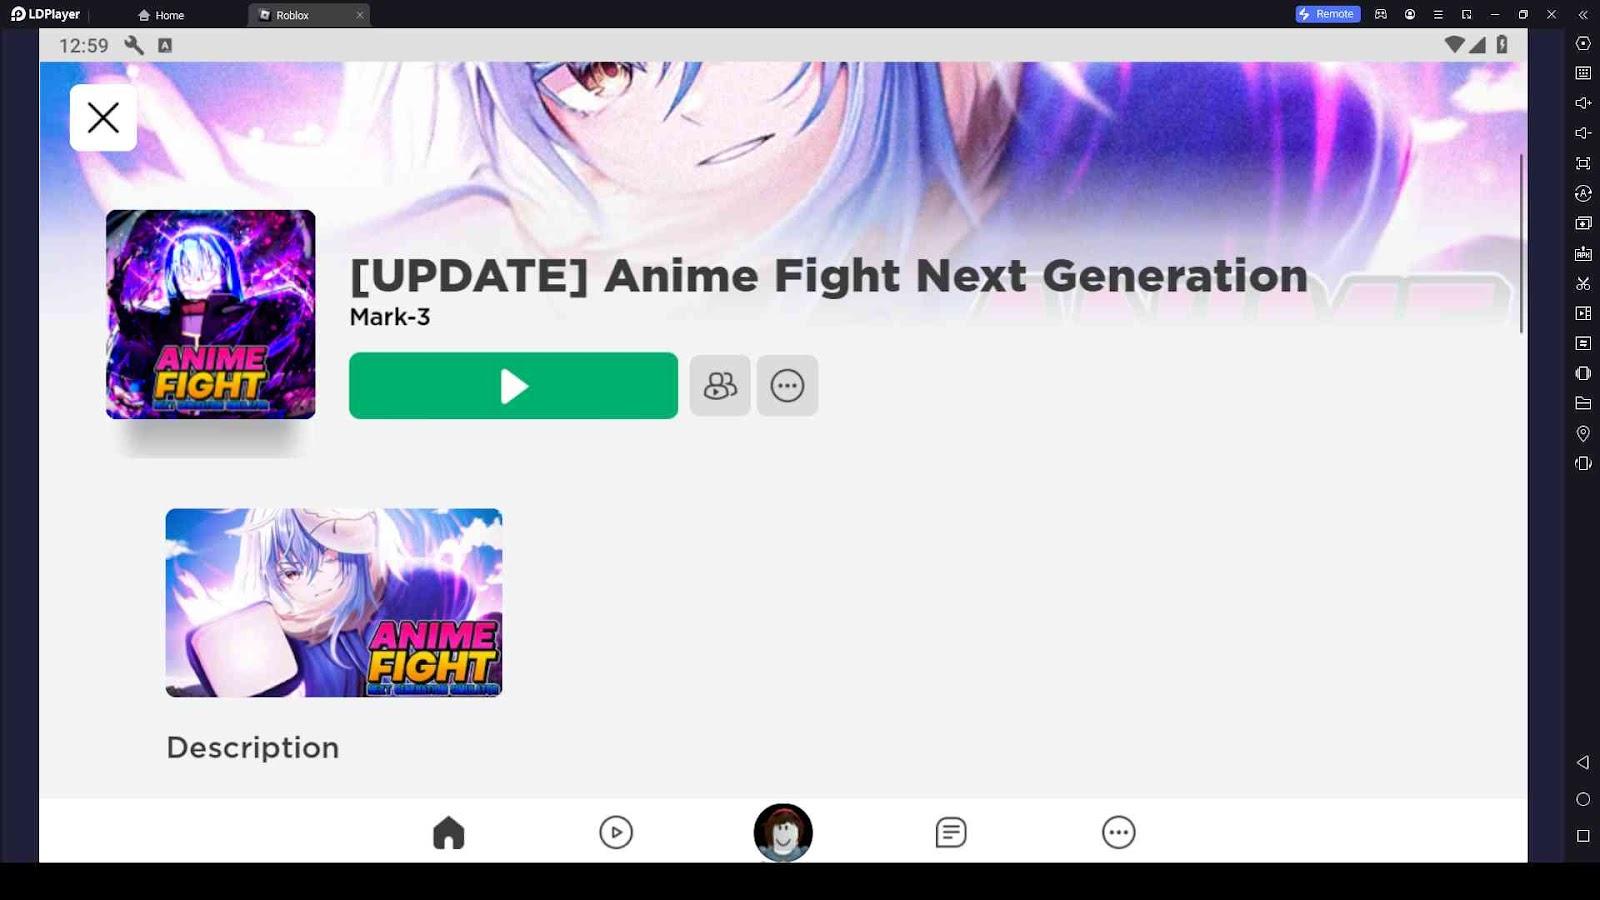 Anime Fight Next Generation codes